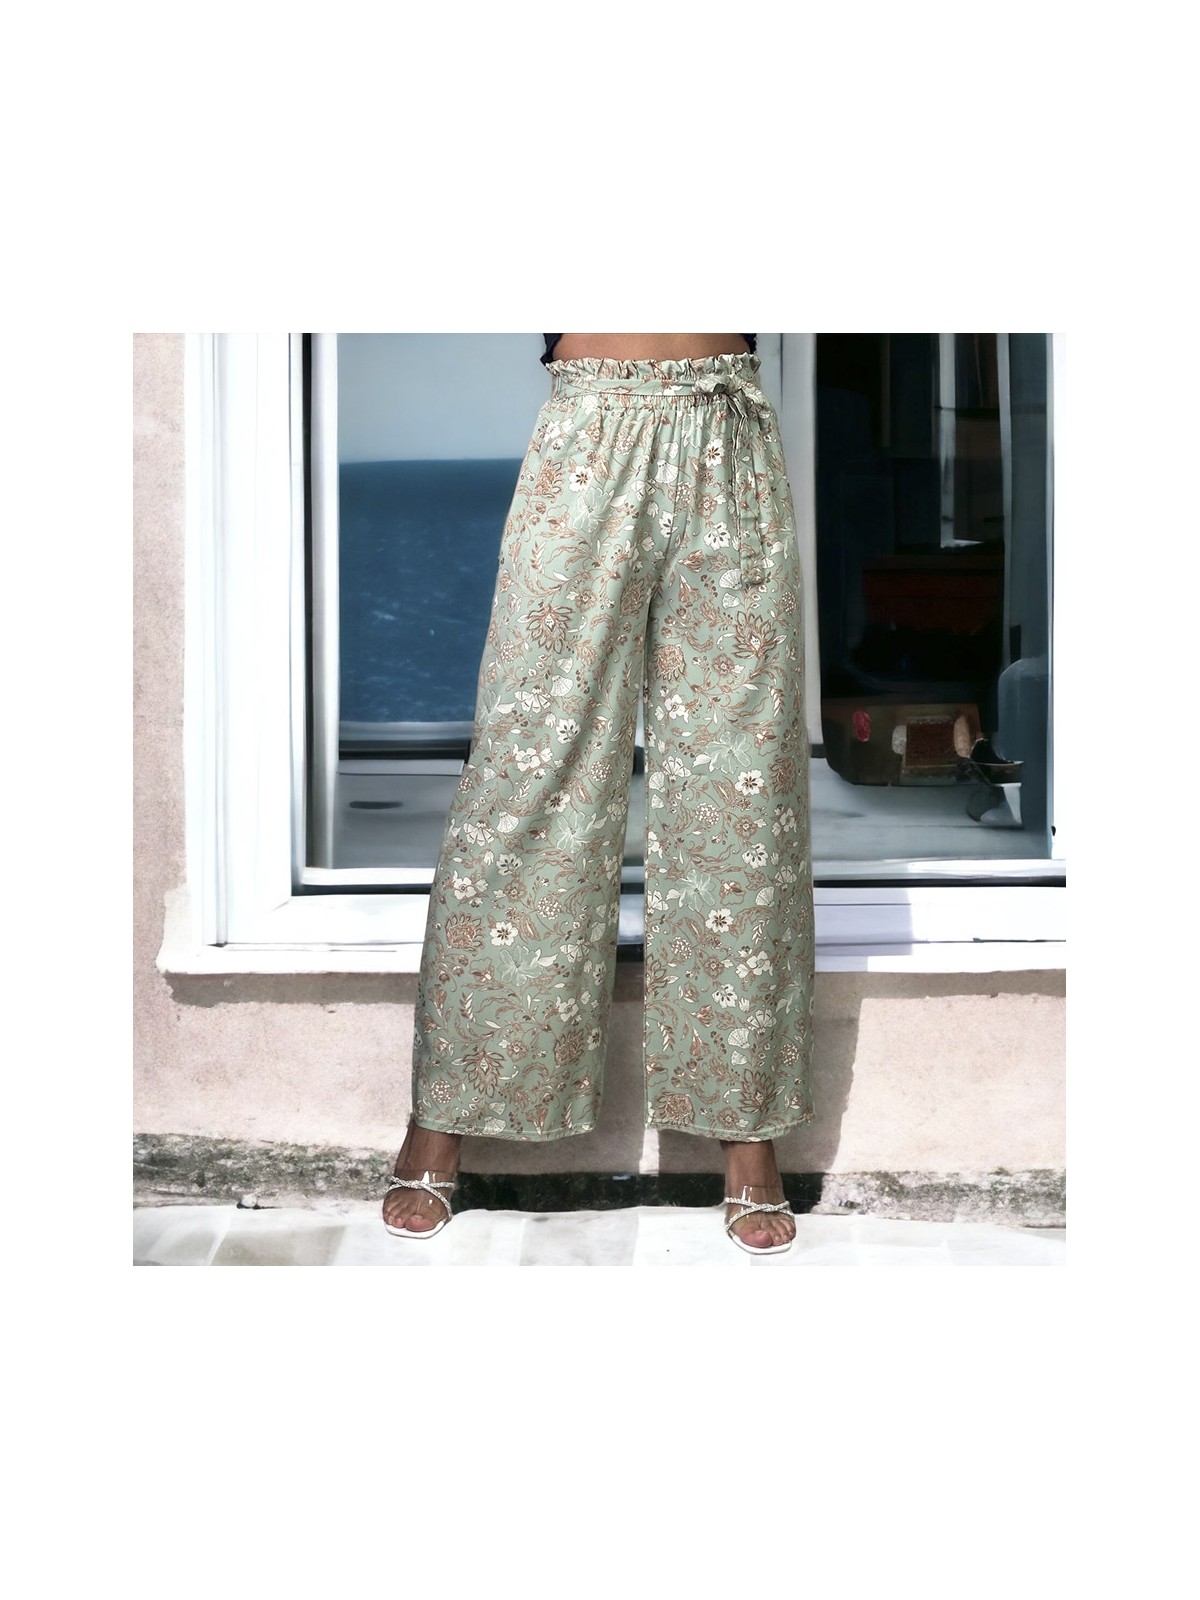 Pantalon palazzo motif fleuris vert - 2